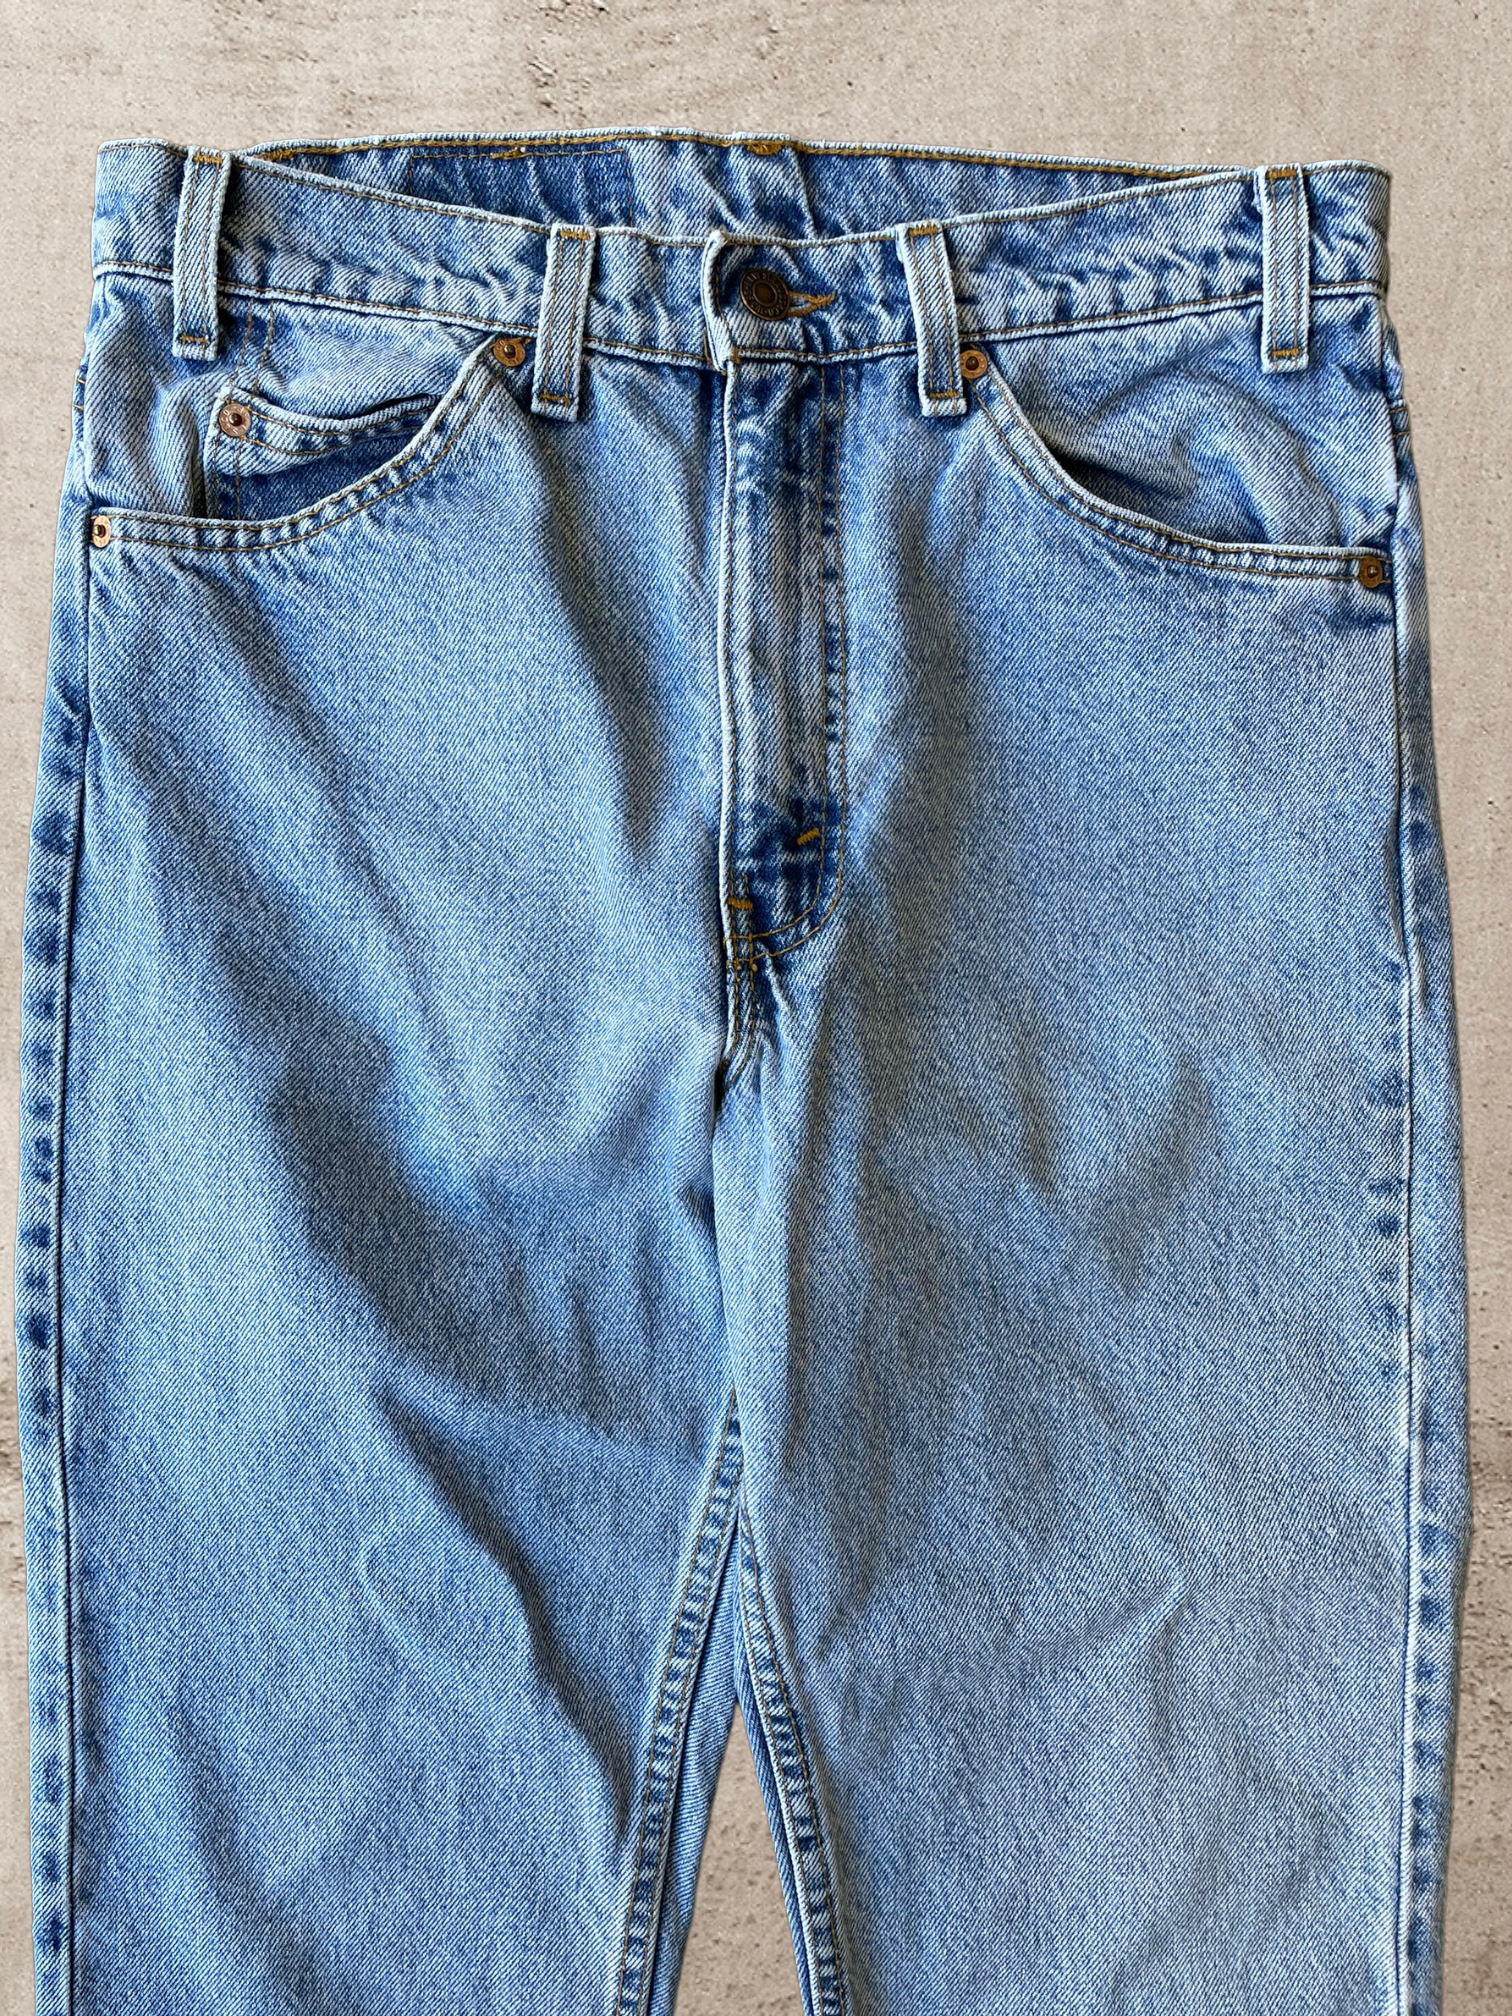 90s Levi 505 Straight Leg Light Wash Jeans - 32x33